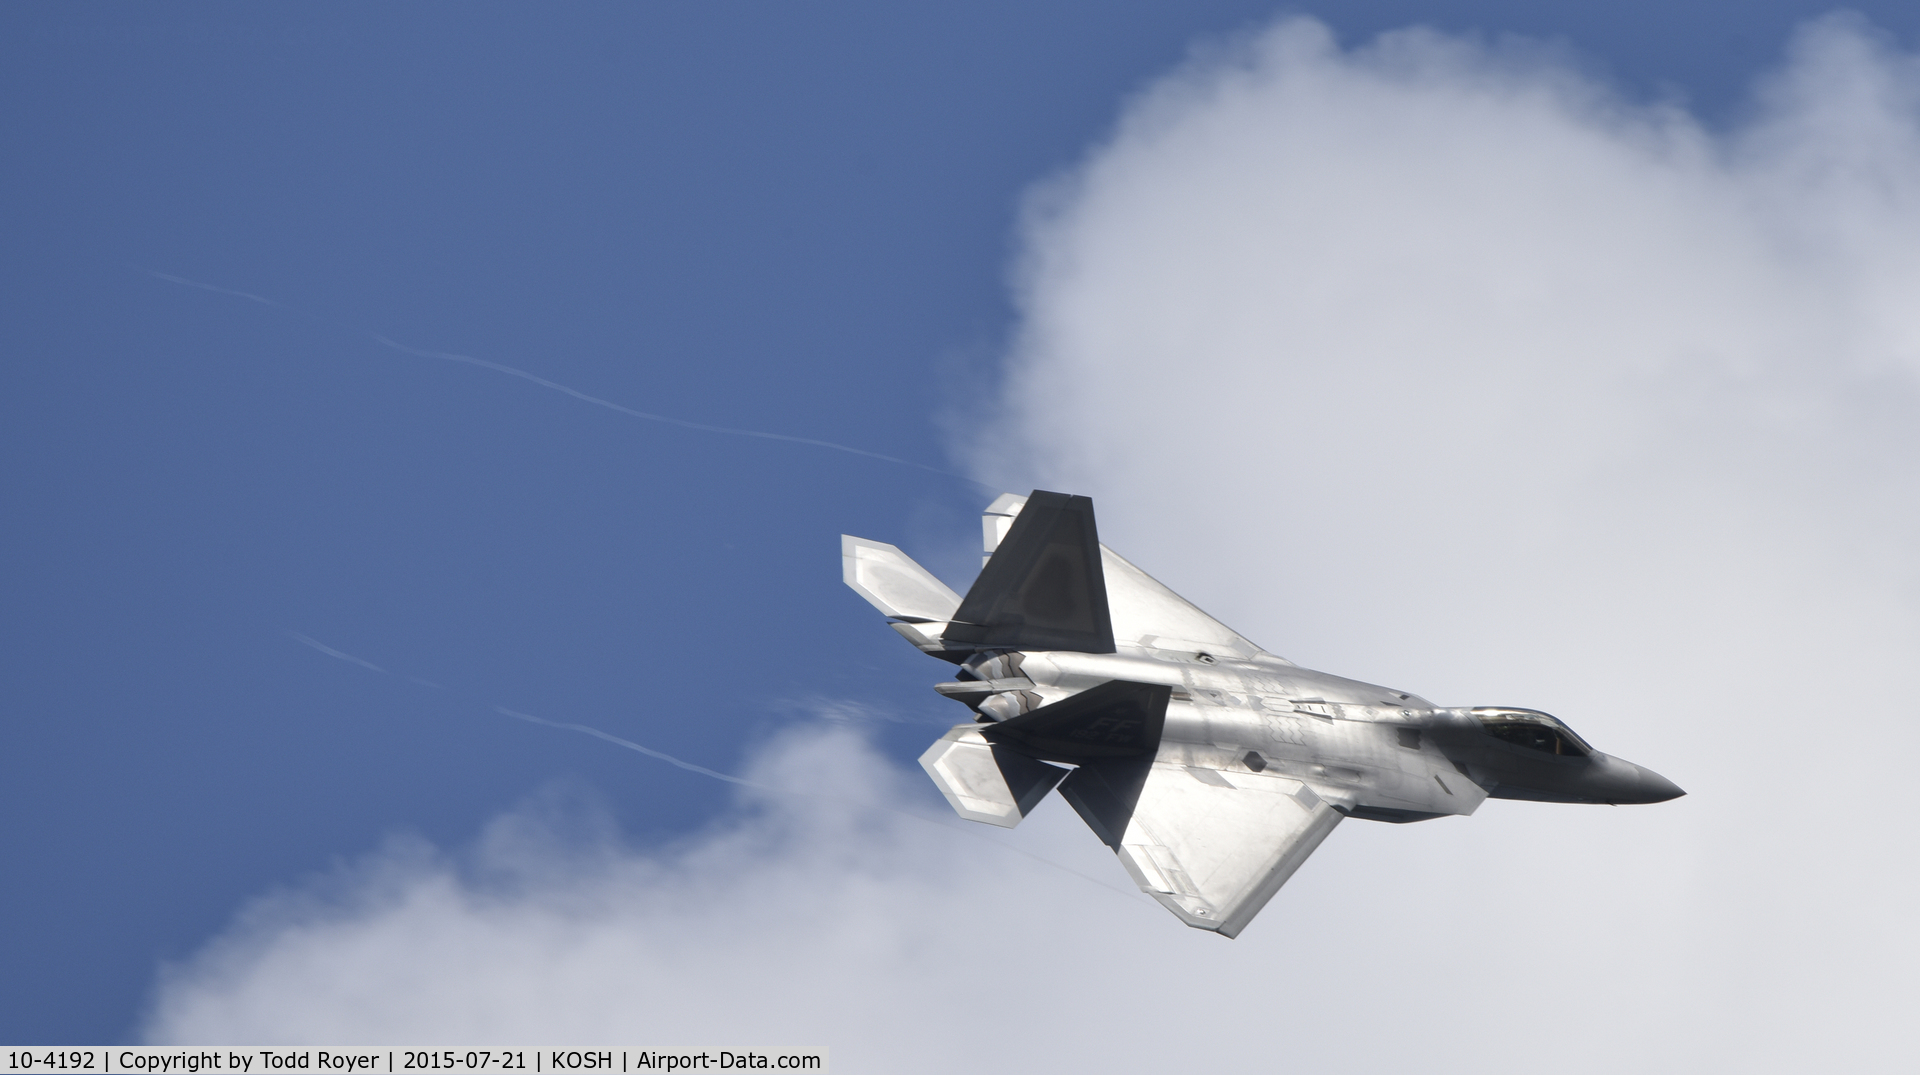 10-4192, 2010 Lockheed Martin F-22A Raptor C/N 4192, Airventure 2015